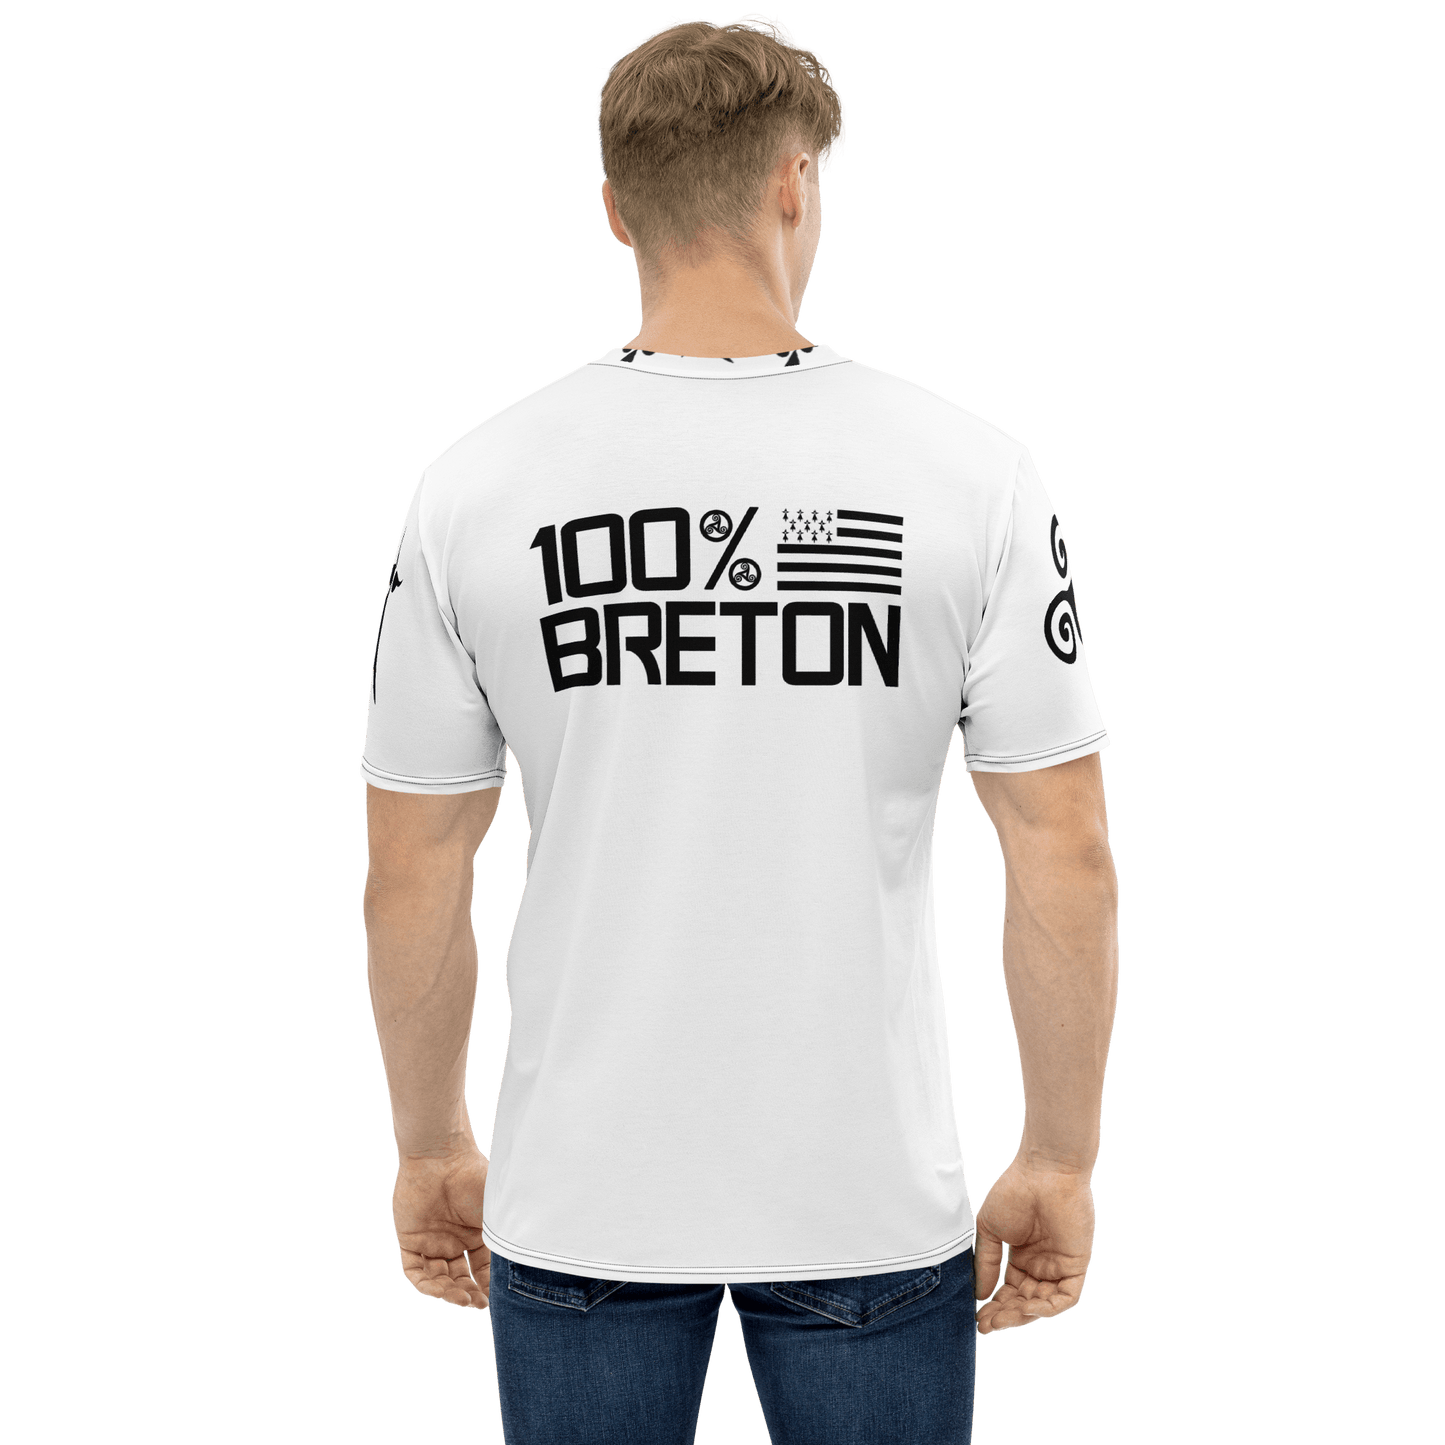 Tee-Shirt Hermines Triskell 100% Bretagne - Autocollant BZH